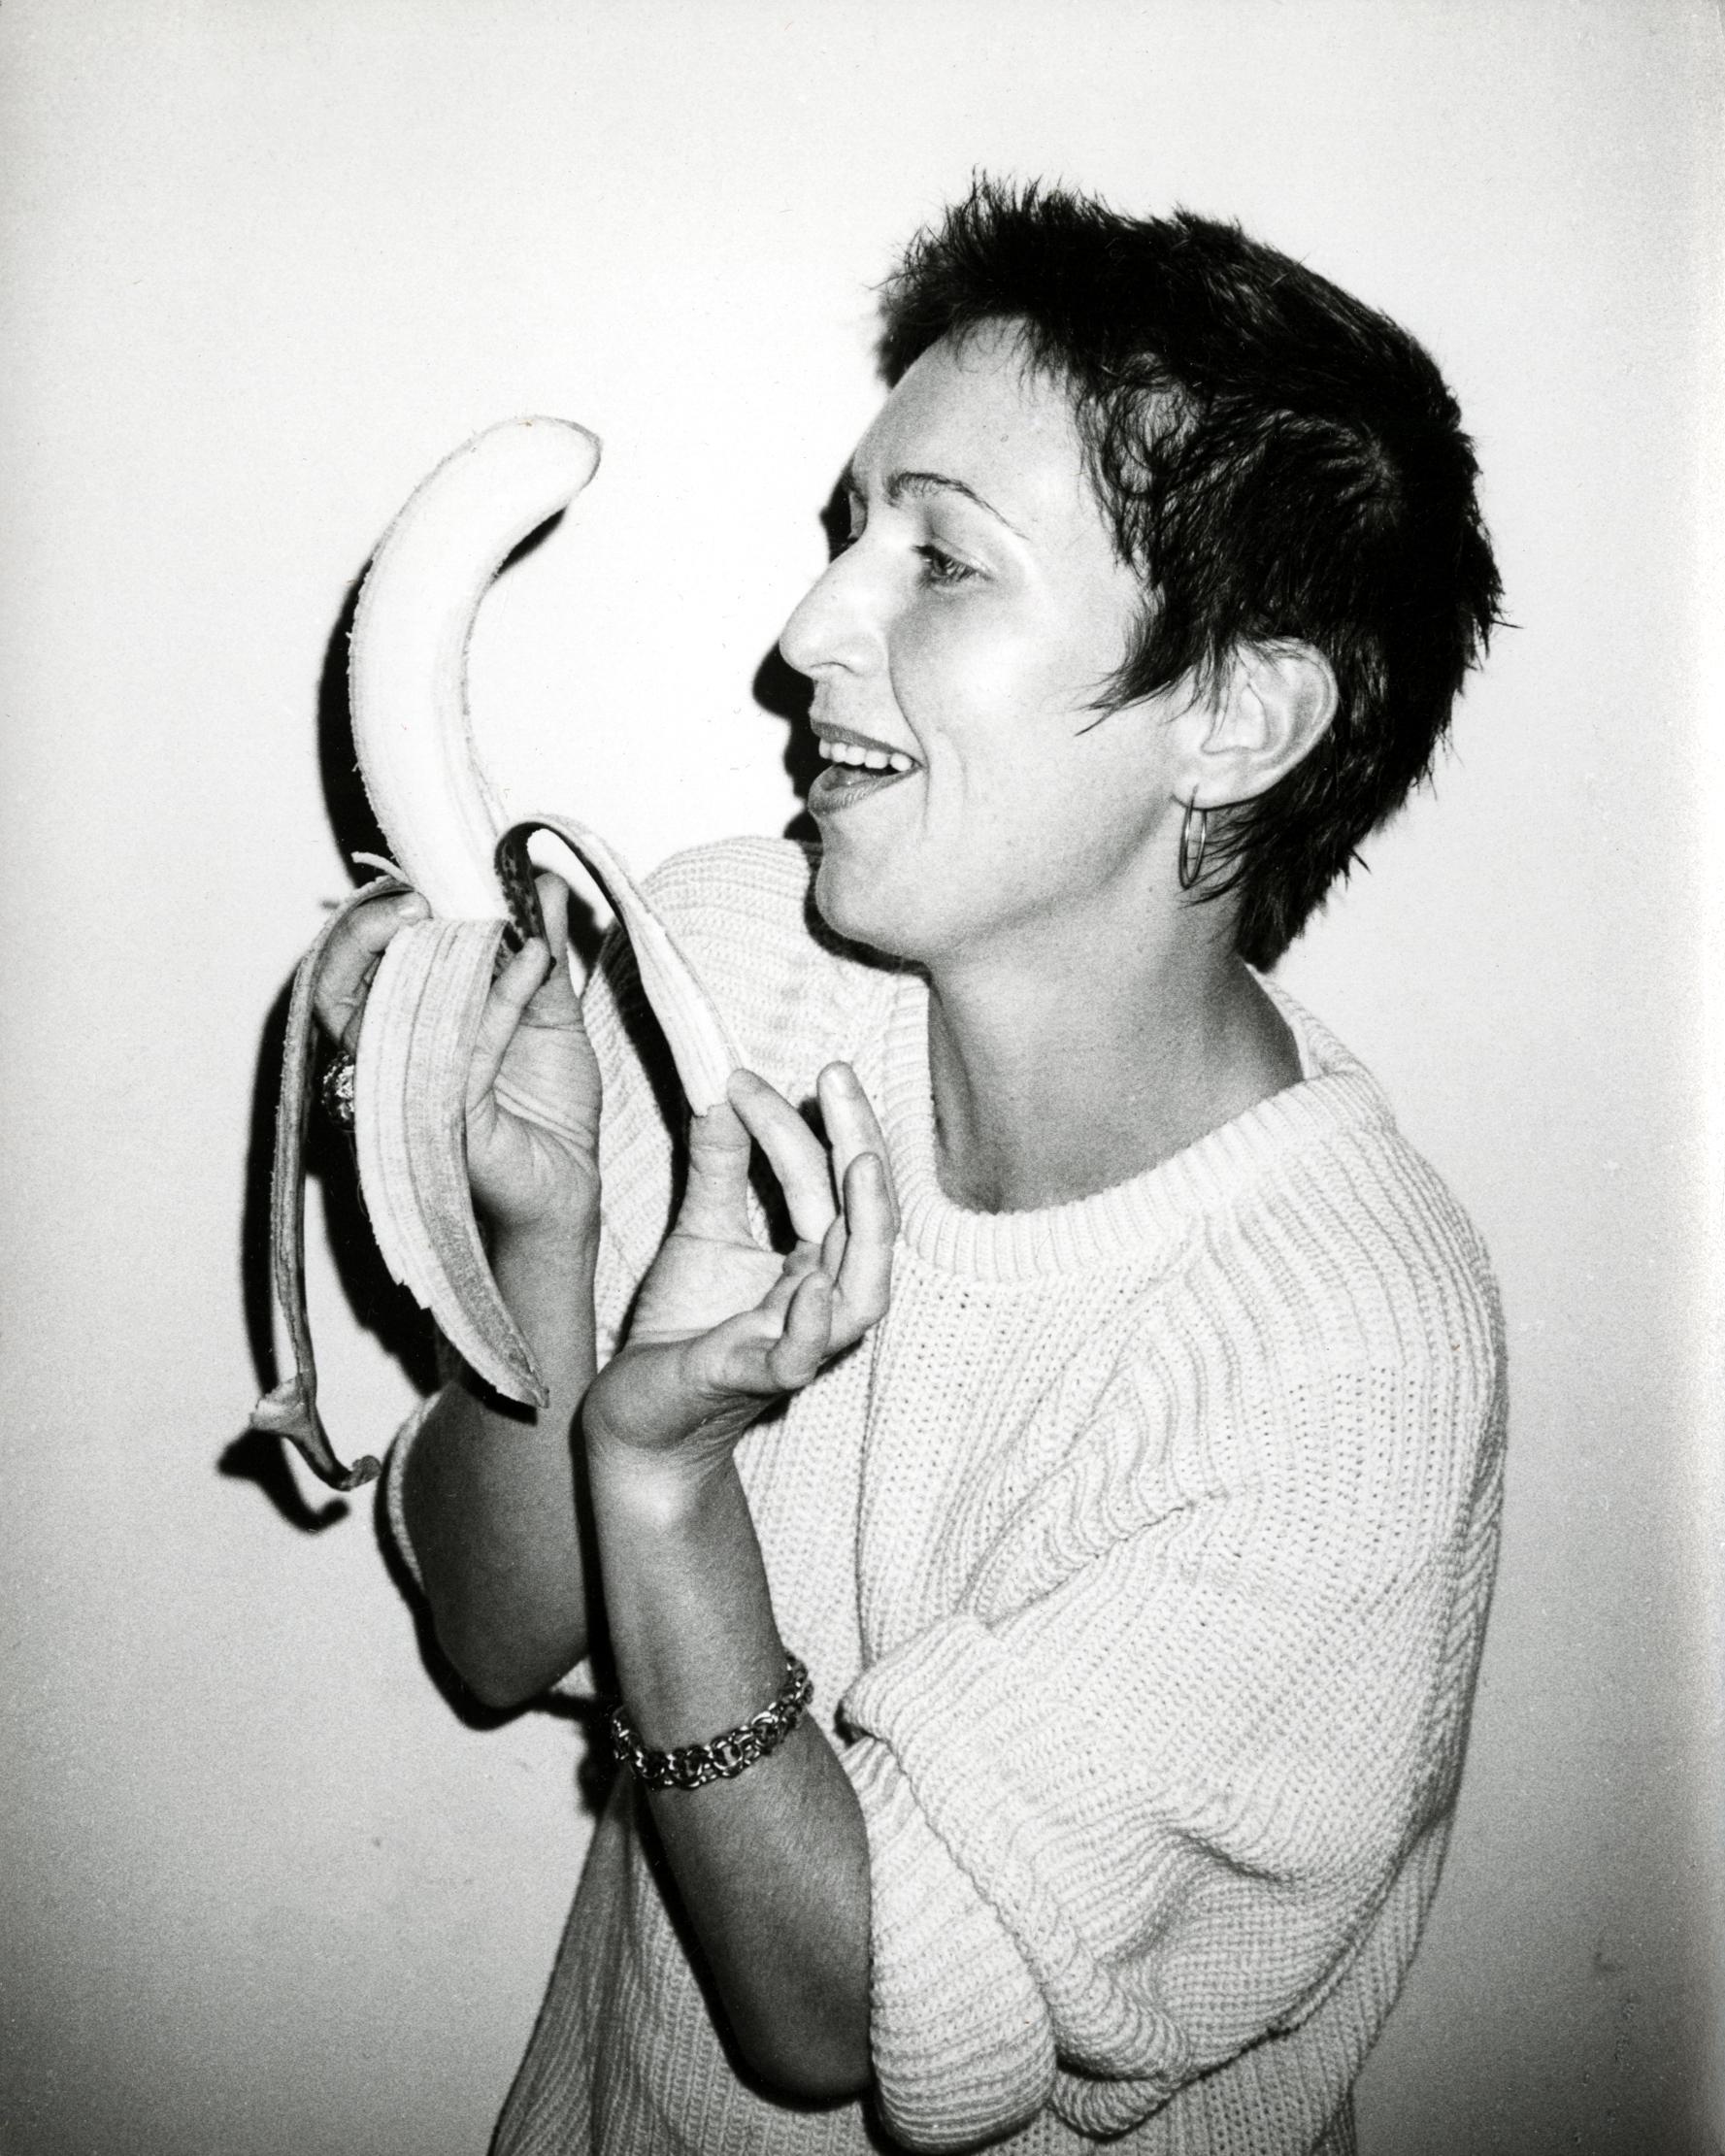 Andy Warhol Portrait Photograph - Photograph of Pat Hackett Peeling a Banana